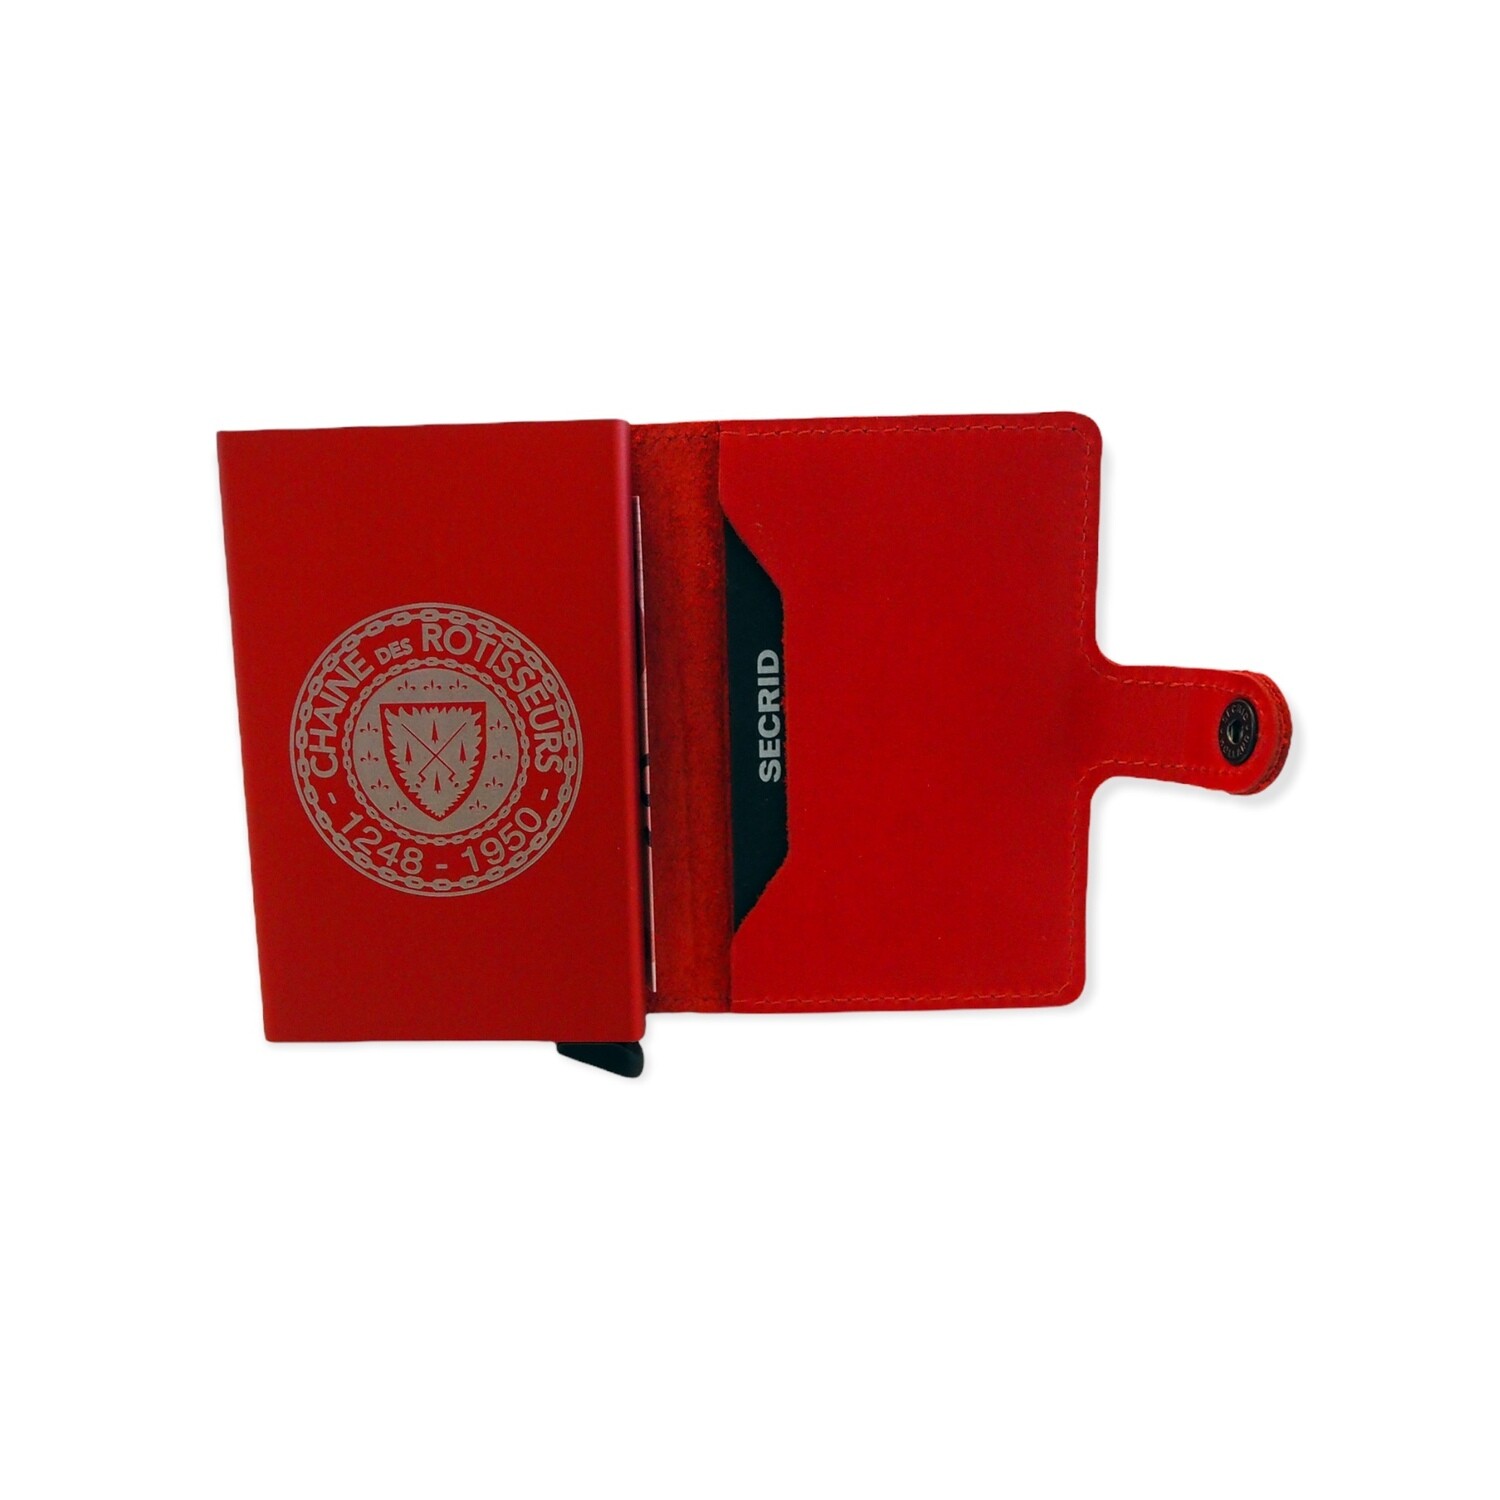 Secrid wallet, red, Chaîne laser etching